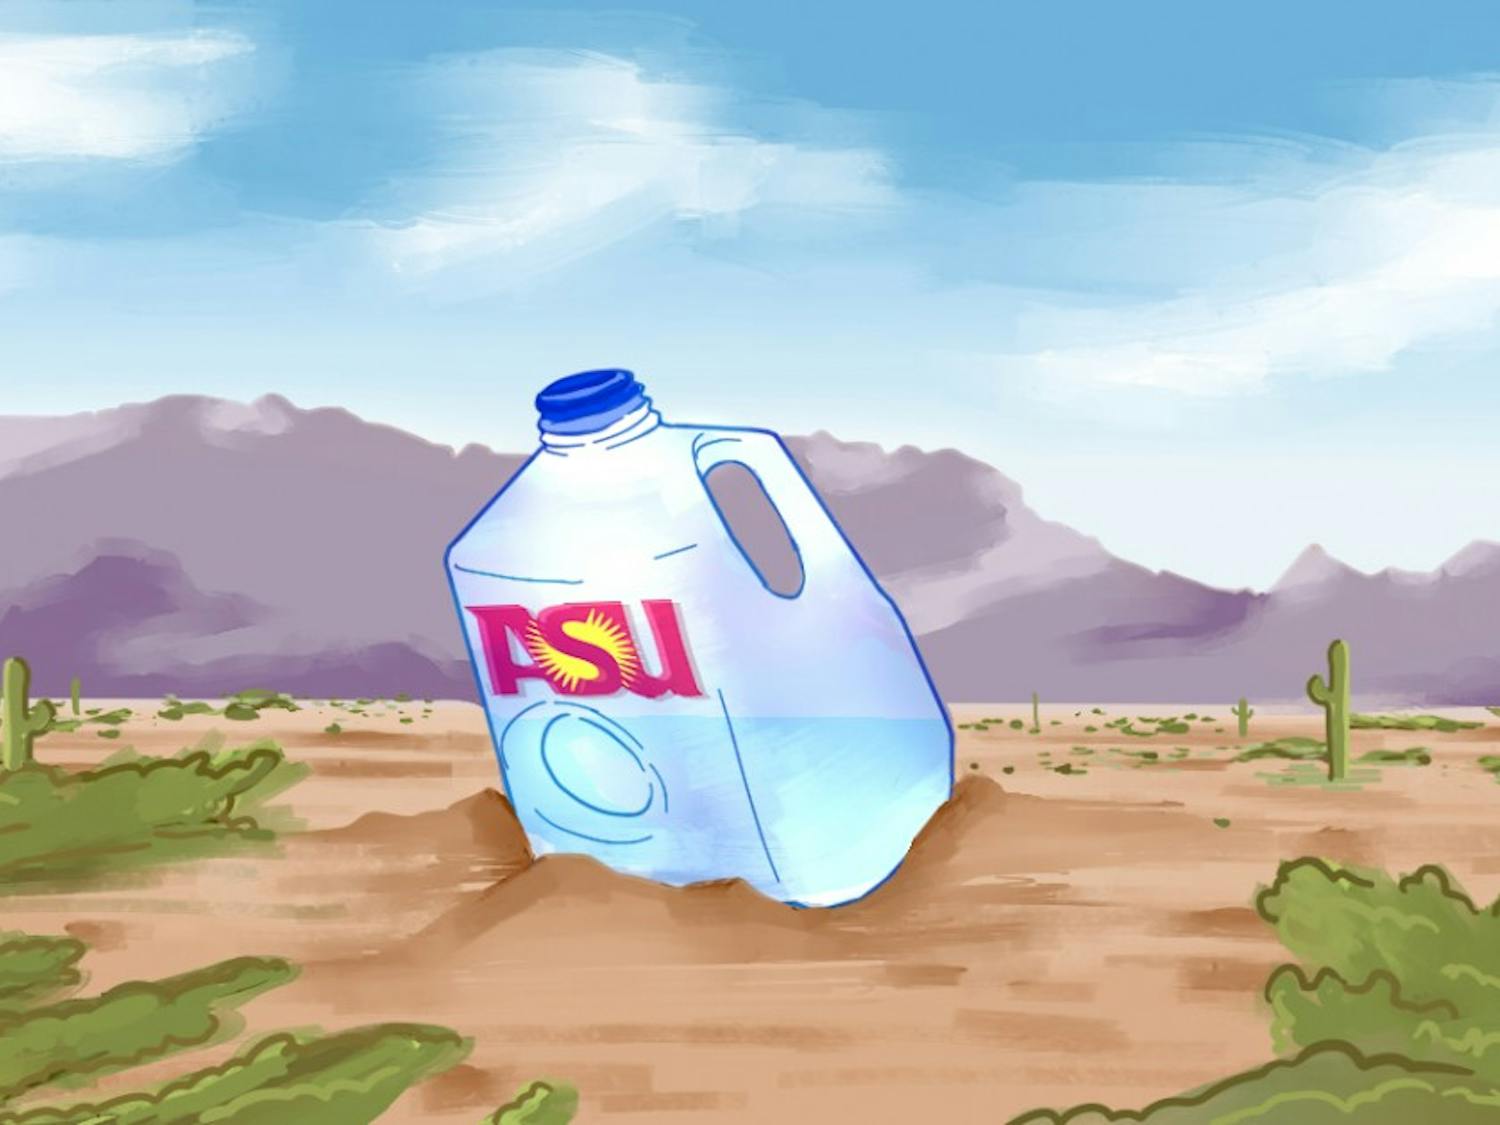 jug in desert w logo.jpg